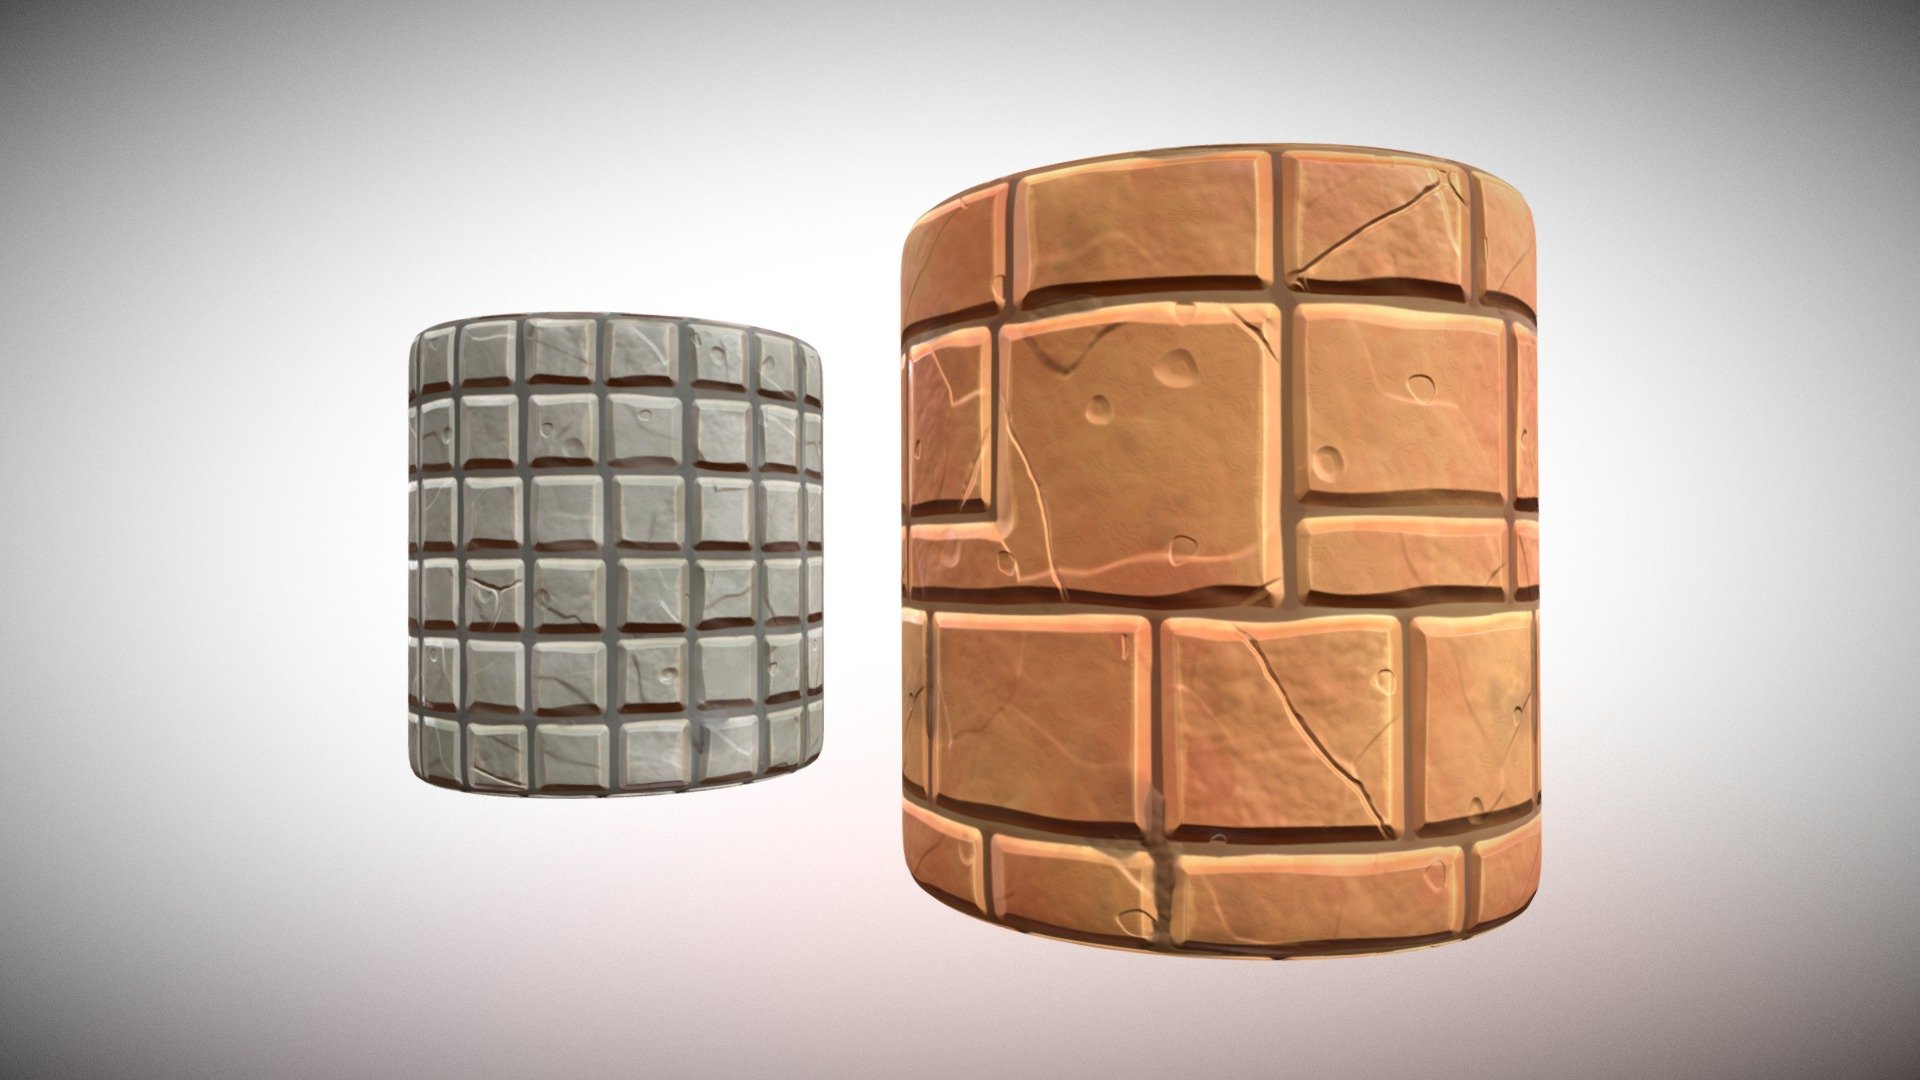 Textures I made with Substance Designer.
https://www.artstation.com/imchez - Stylized Bricks Texture - 3D model by ImChez 3d model